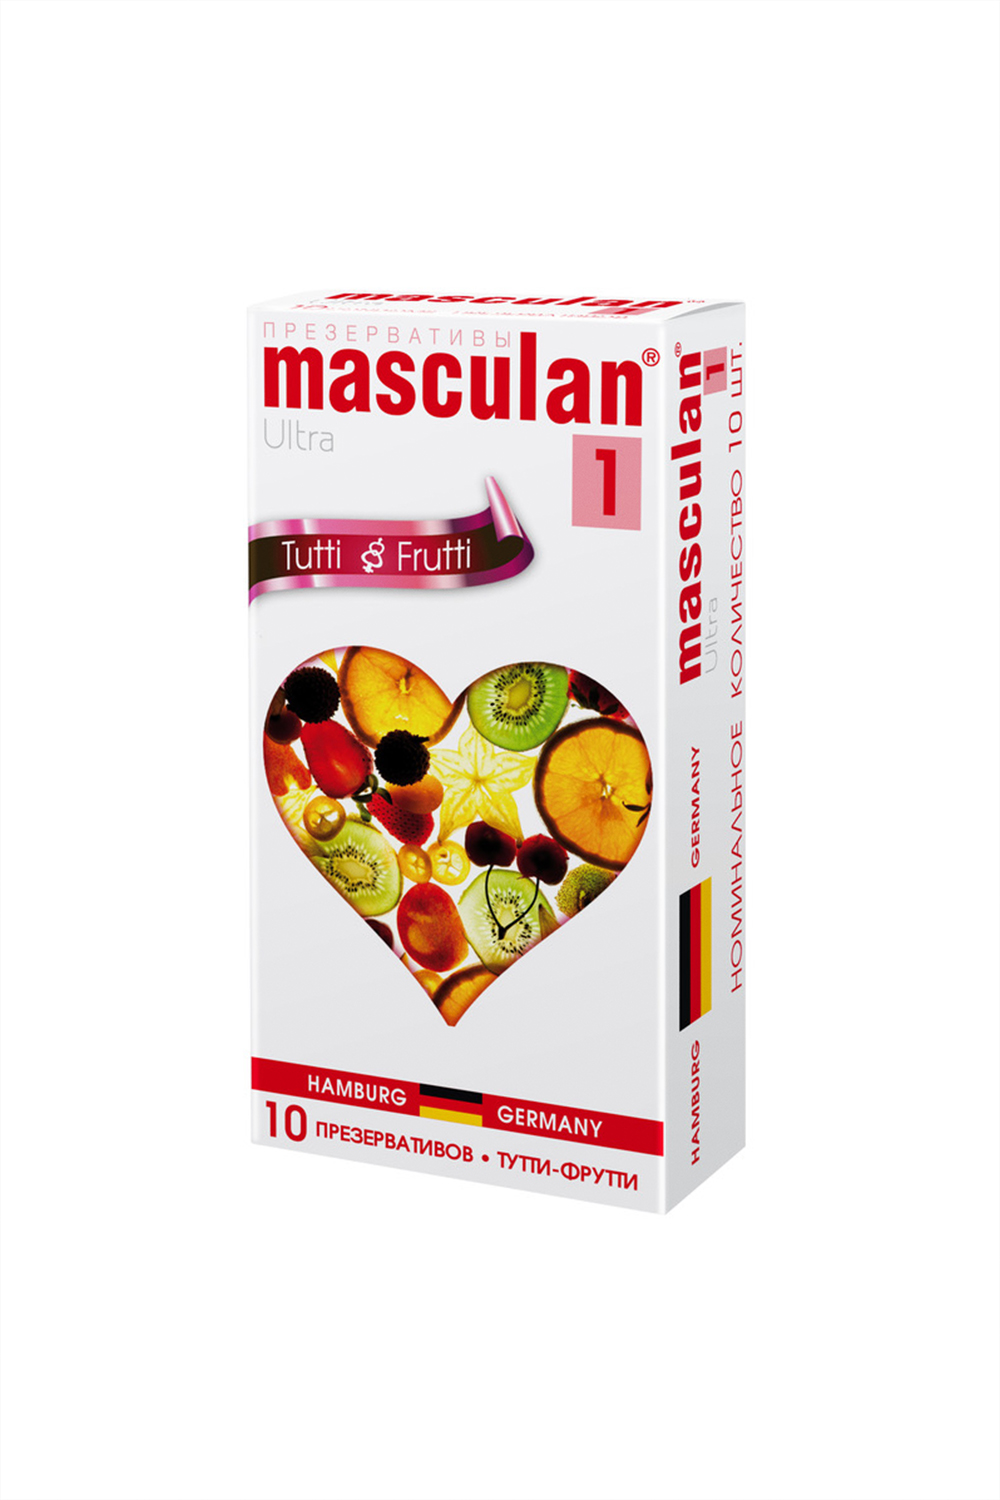 Ароматизированные презервативы Masculan Tutti-Frutti Ultra 1 19 см 10 шт